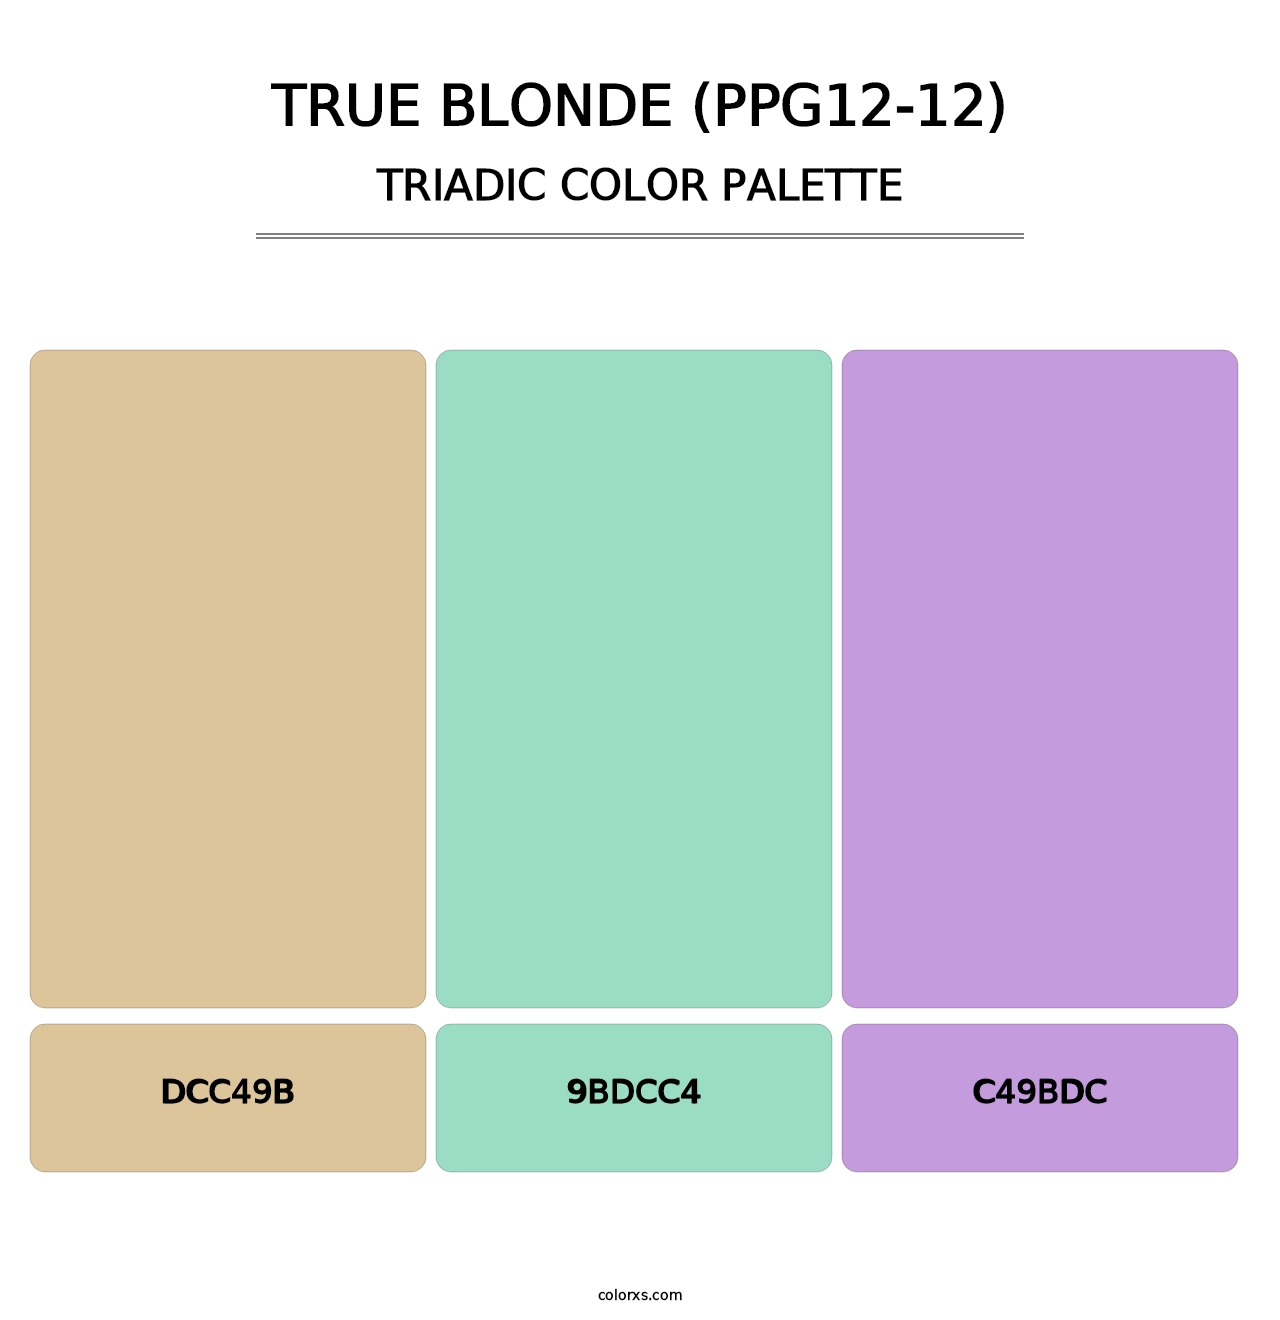 True Blonde (PPG12-12) - Triadic Color Palette